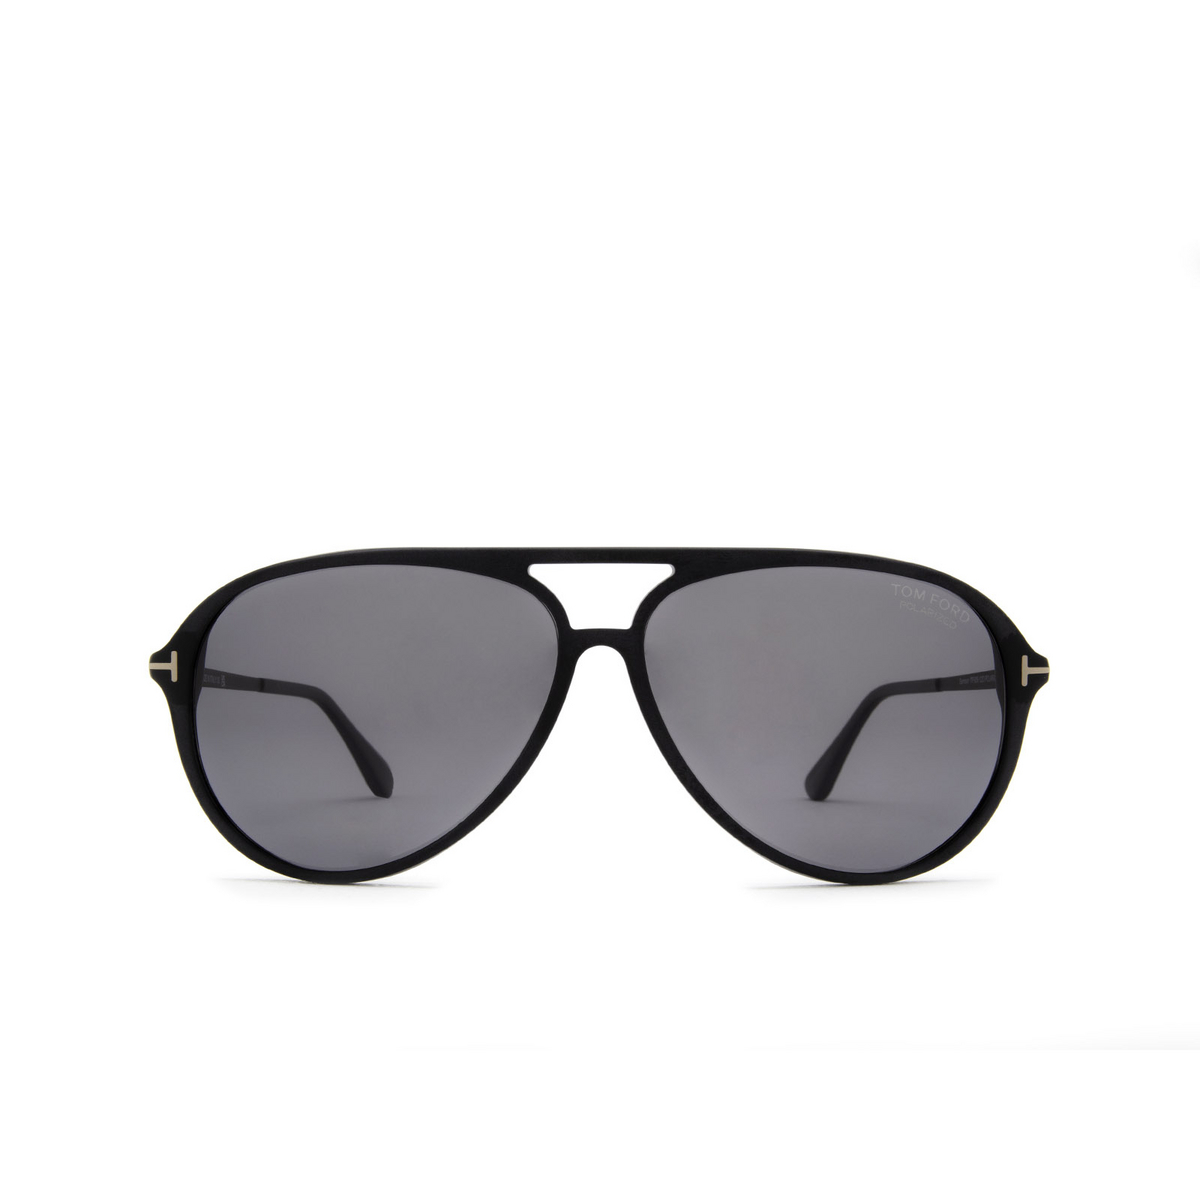 Tom Ford SAMSON Sunglasses 02D Black - front view